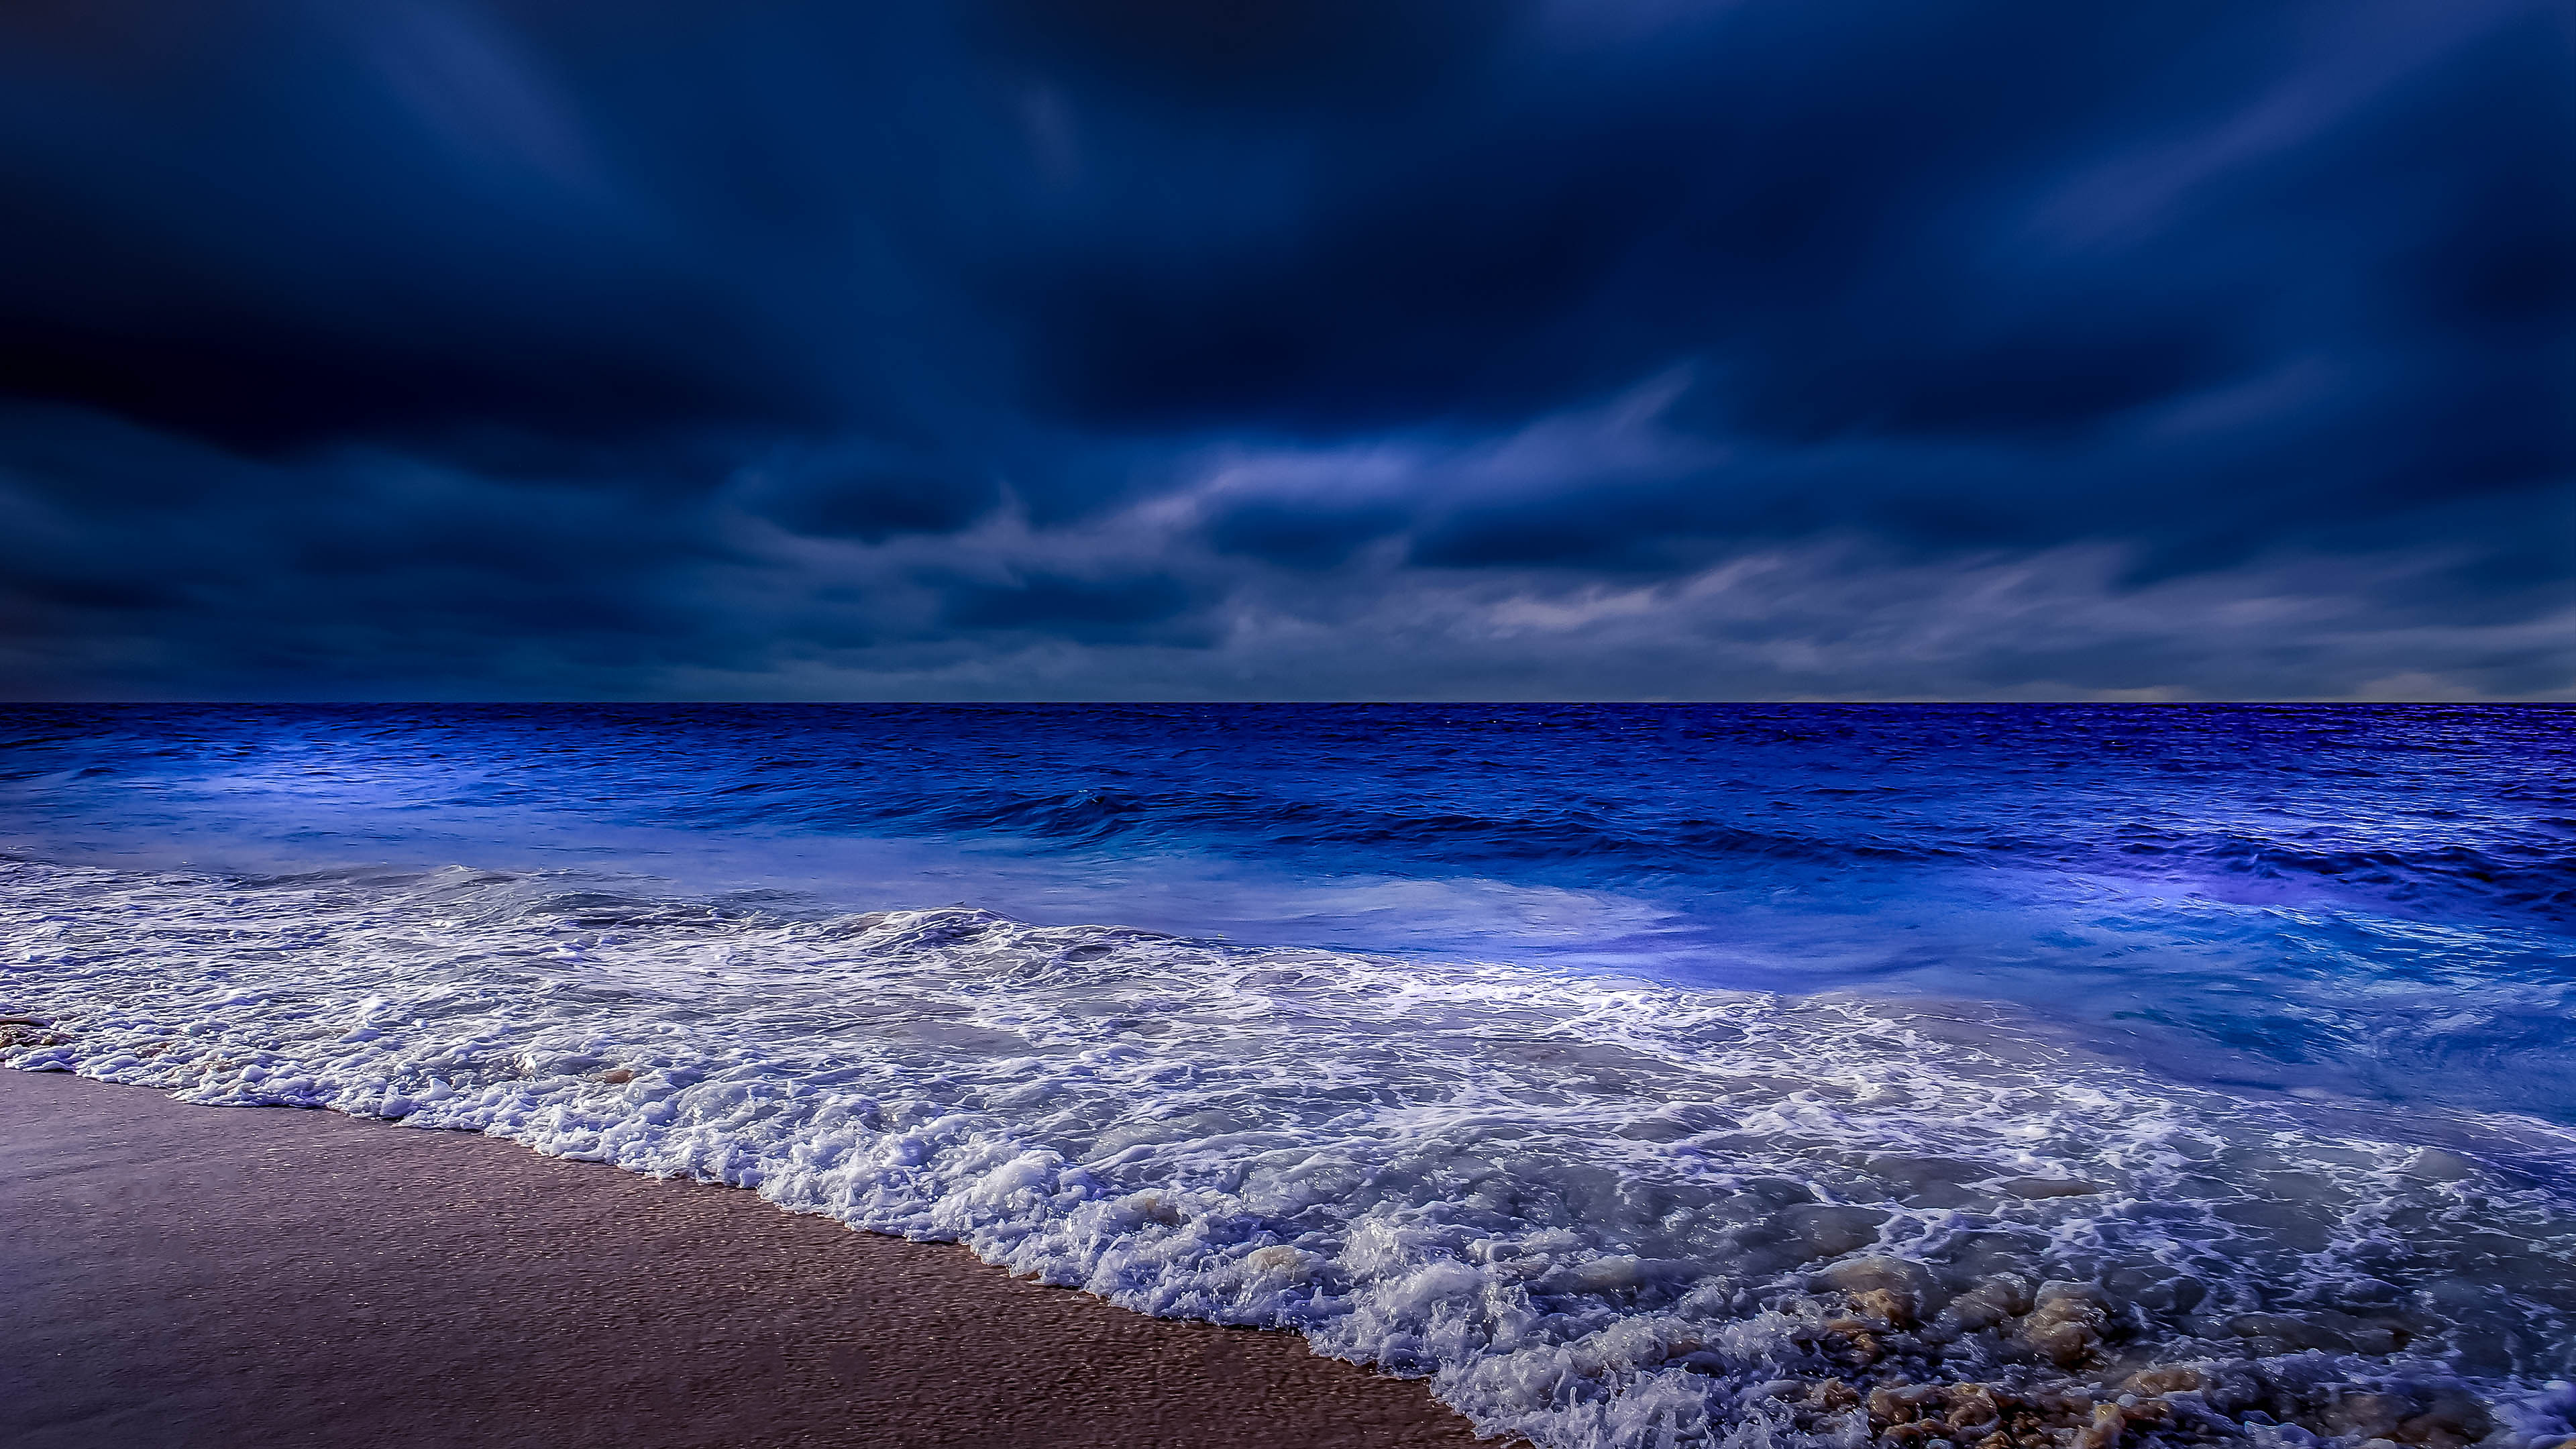 Bismarck Sea waves, Night time scenery, Nature wallpaper, 3840x2160 4K Desktop